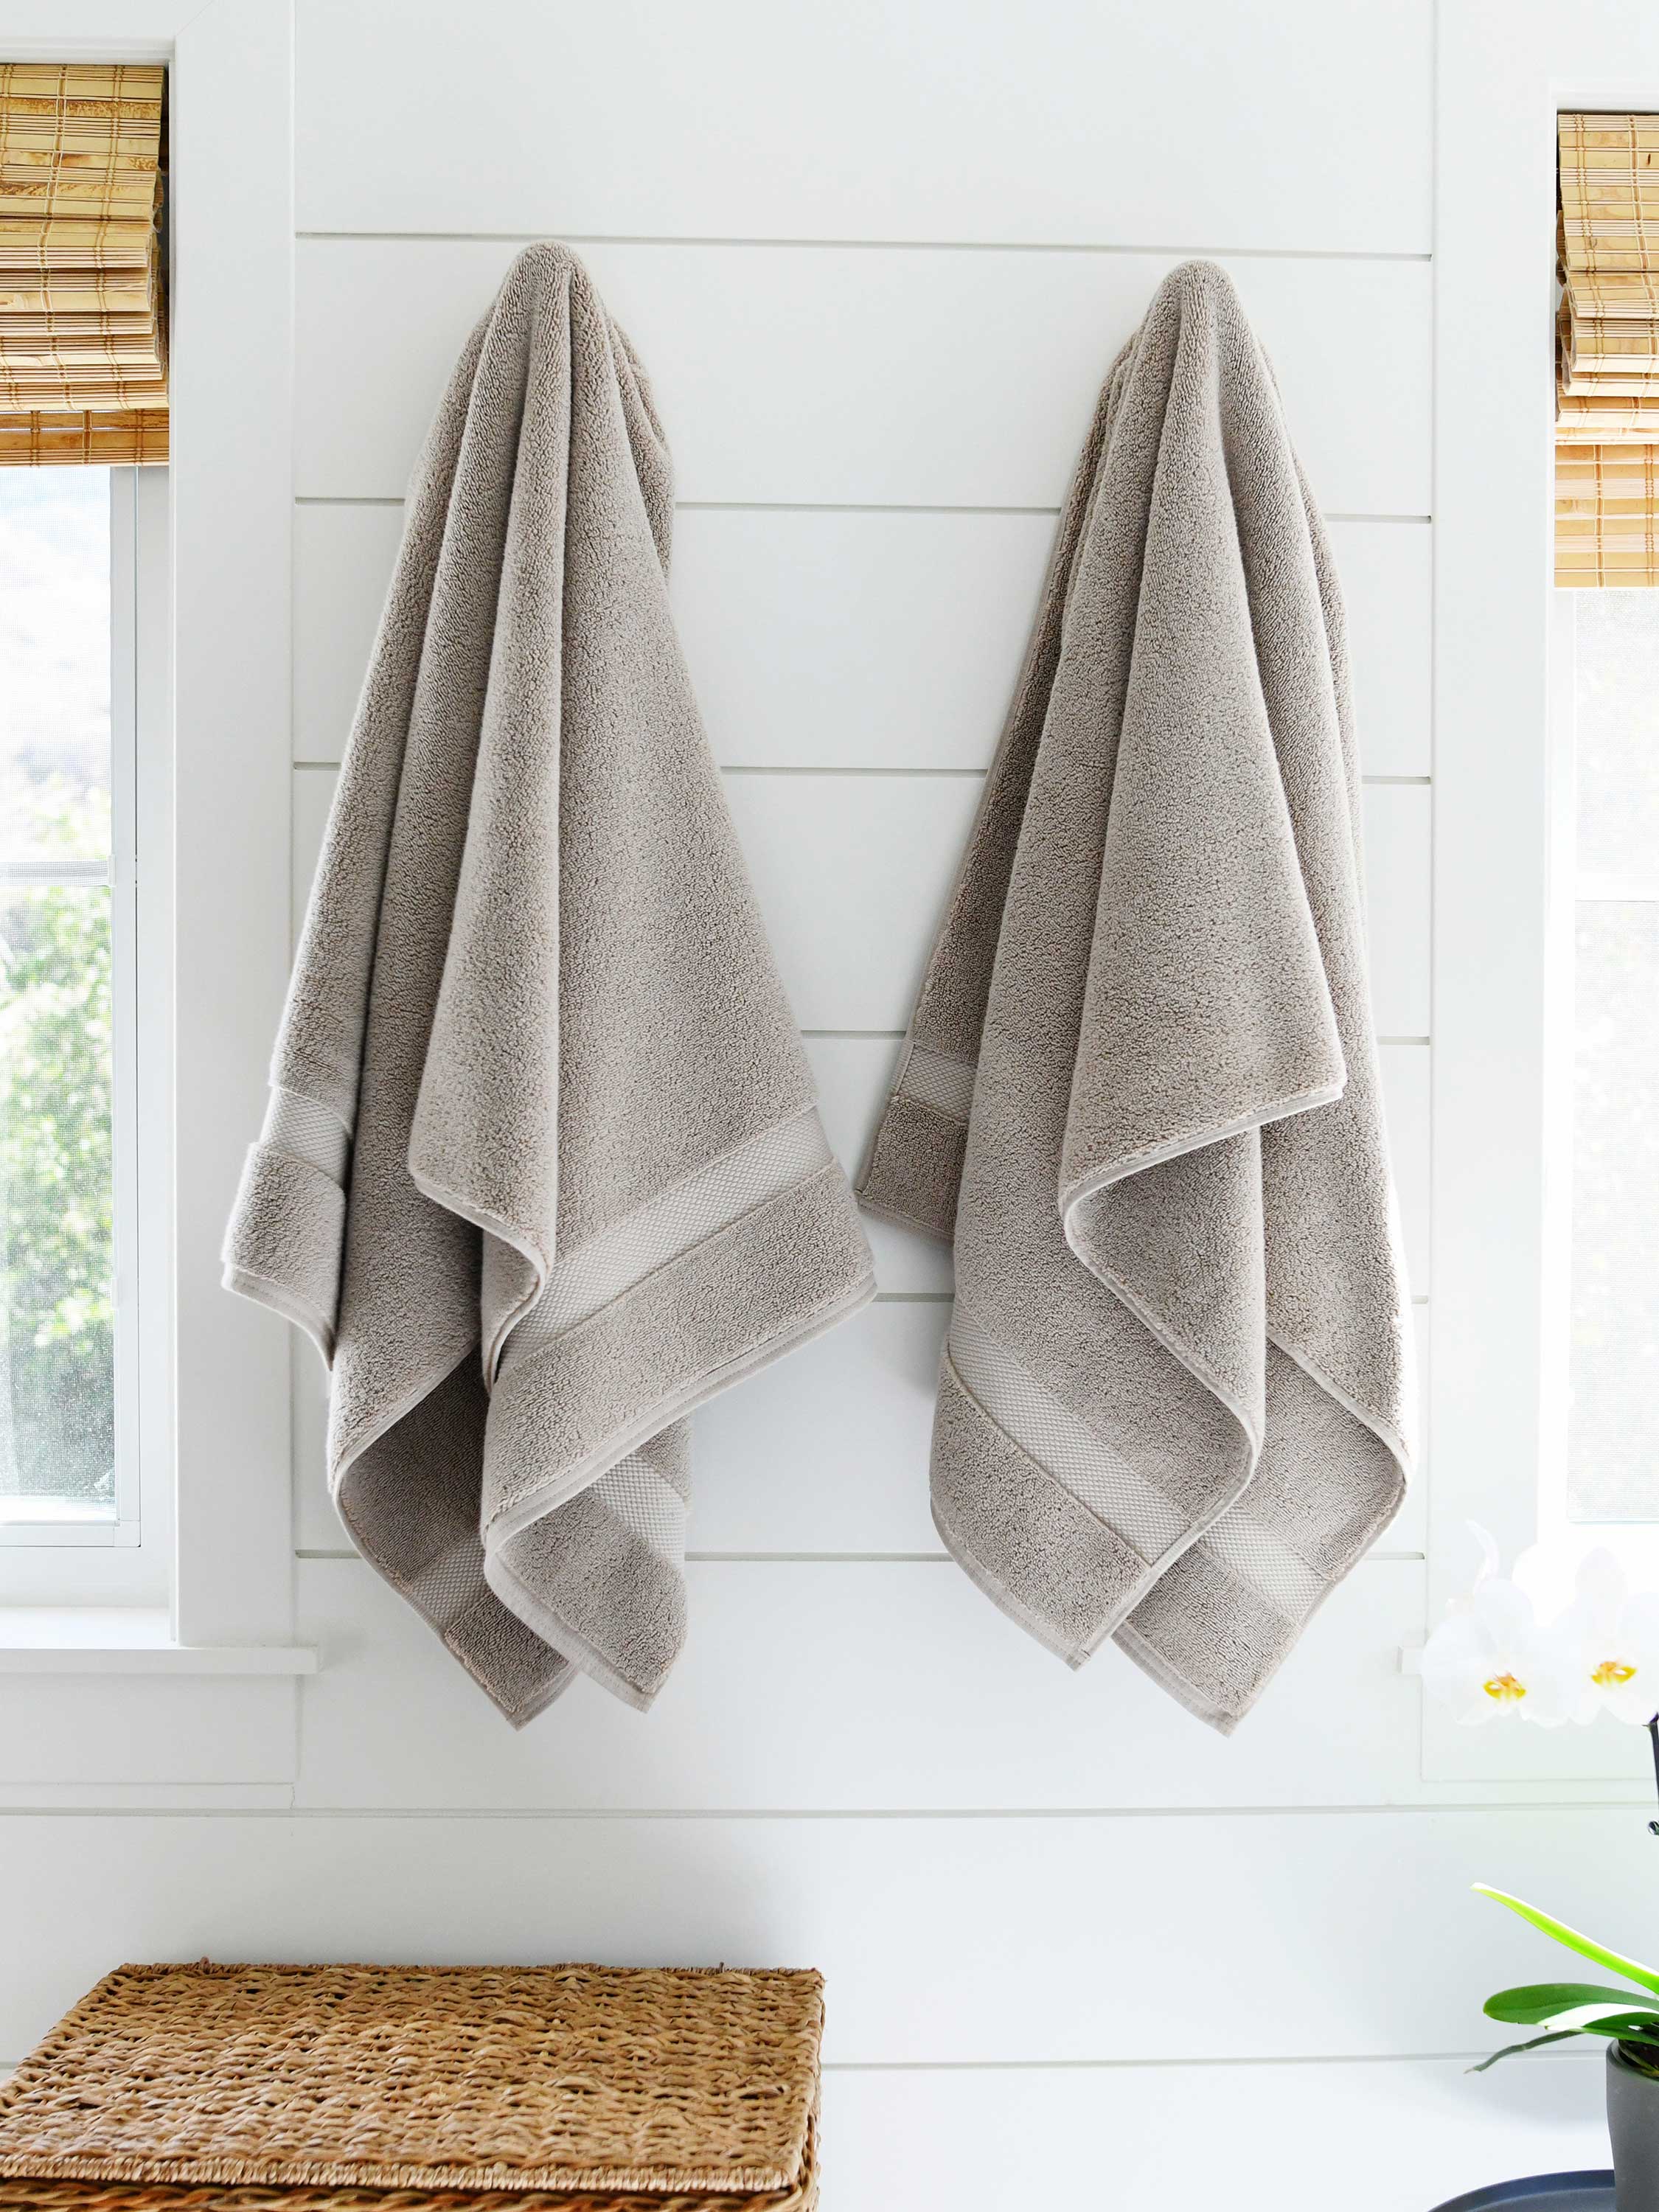 Extra Large Bath Towel - Oversized Ultra Bath Sheet - 100% Cotton